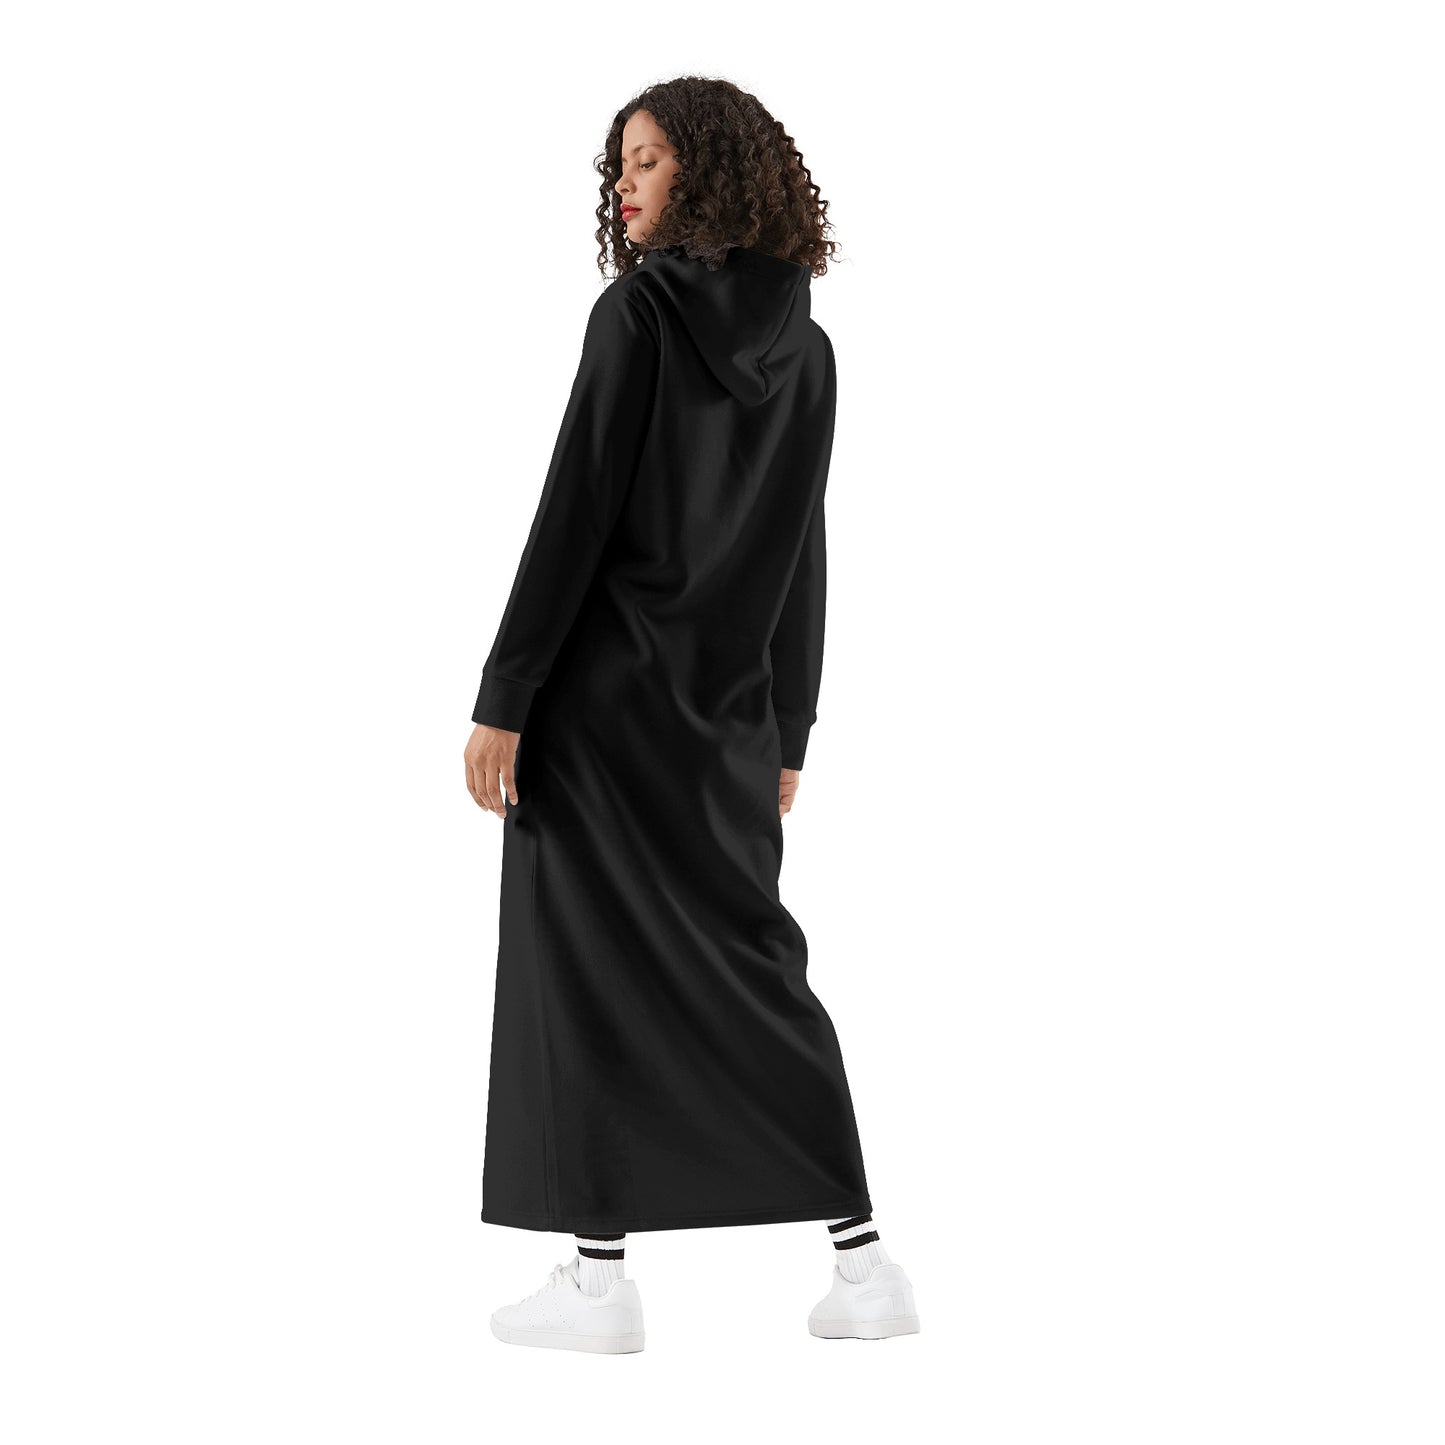 T4x Black Cute and Comfortable Womens Long Length Hoodie Dress